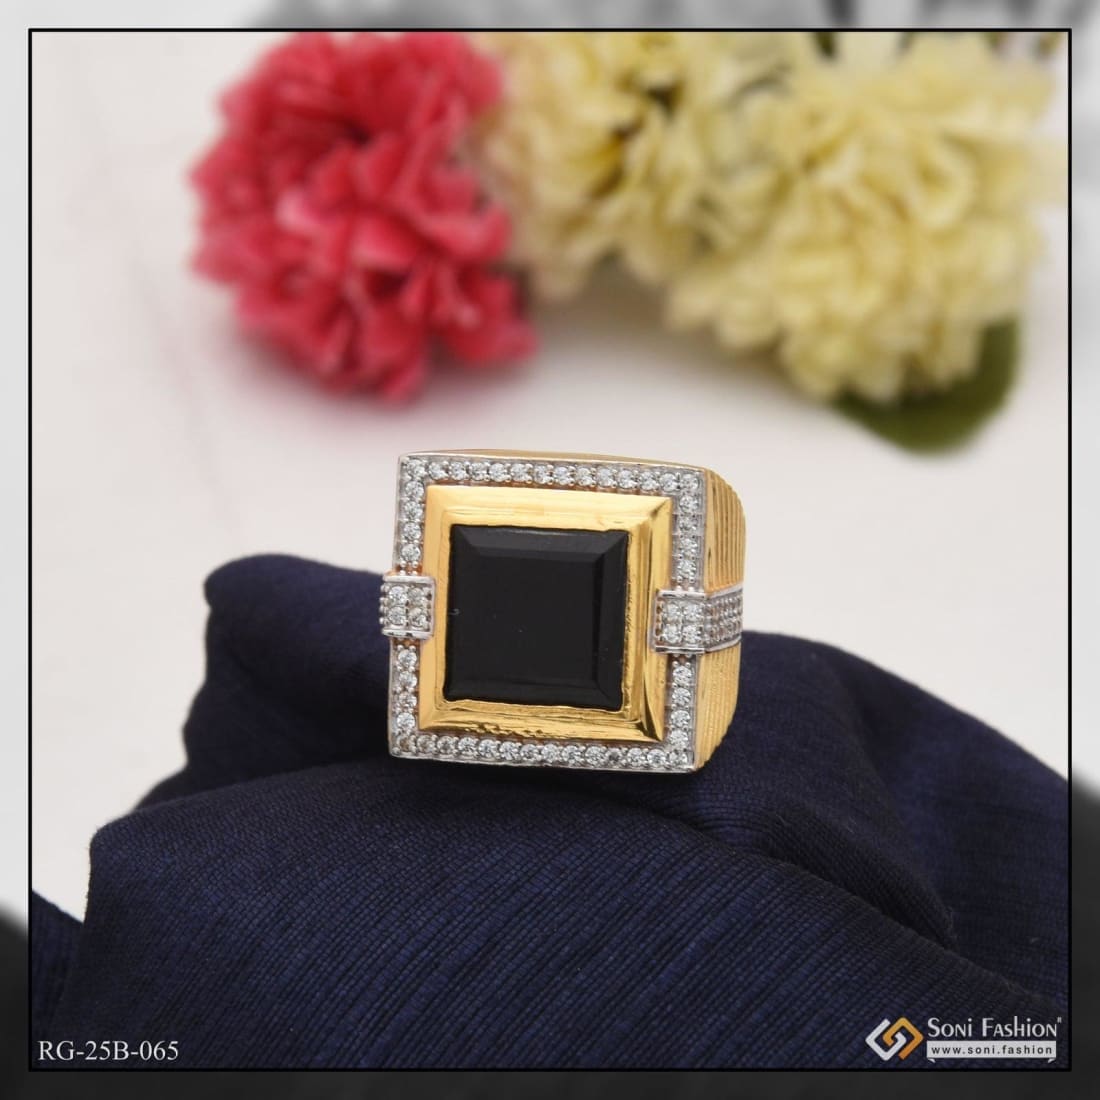 1 gram gold forming black stone chic design superior quality ring style b065 soni fashion